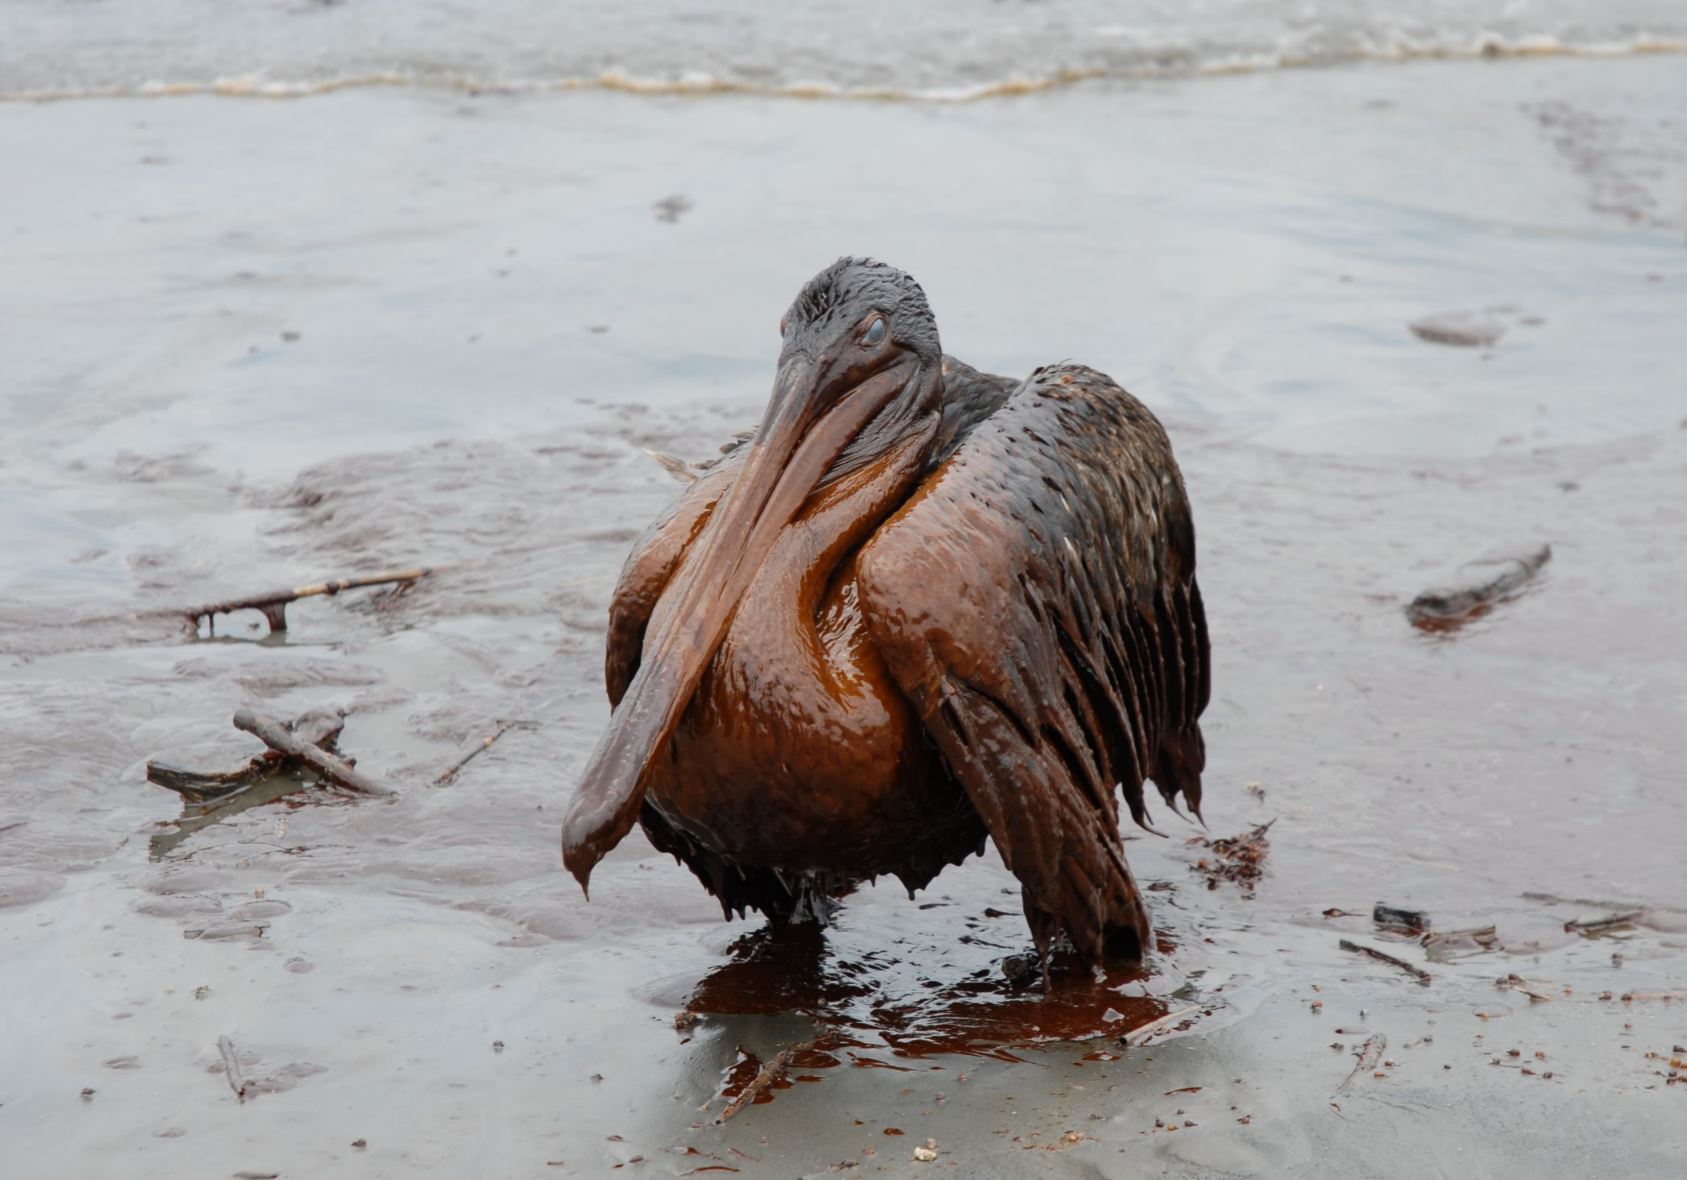 http://news.flinders.edu.au/blog/2018/04/19/slick-solution-oil-spills/